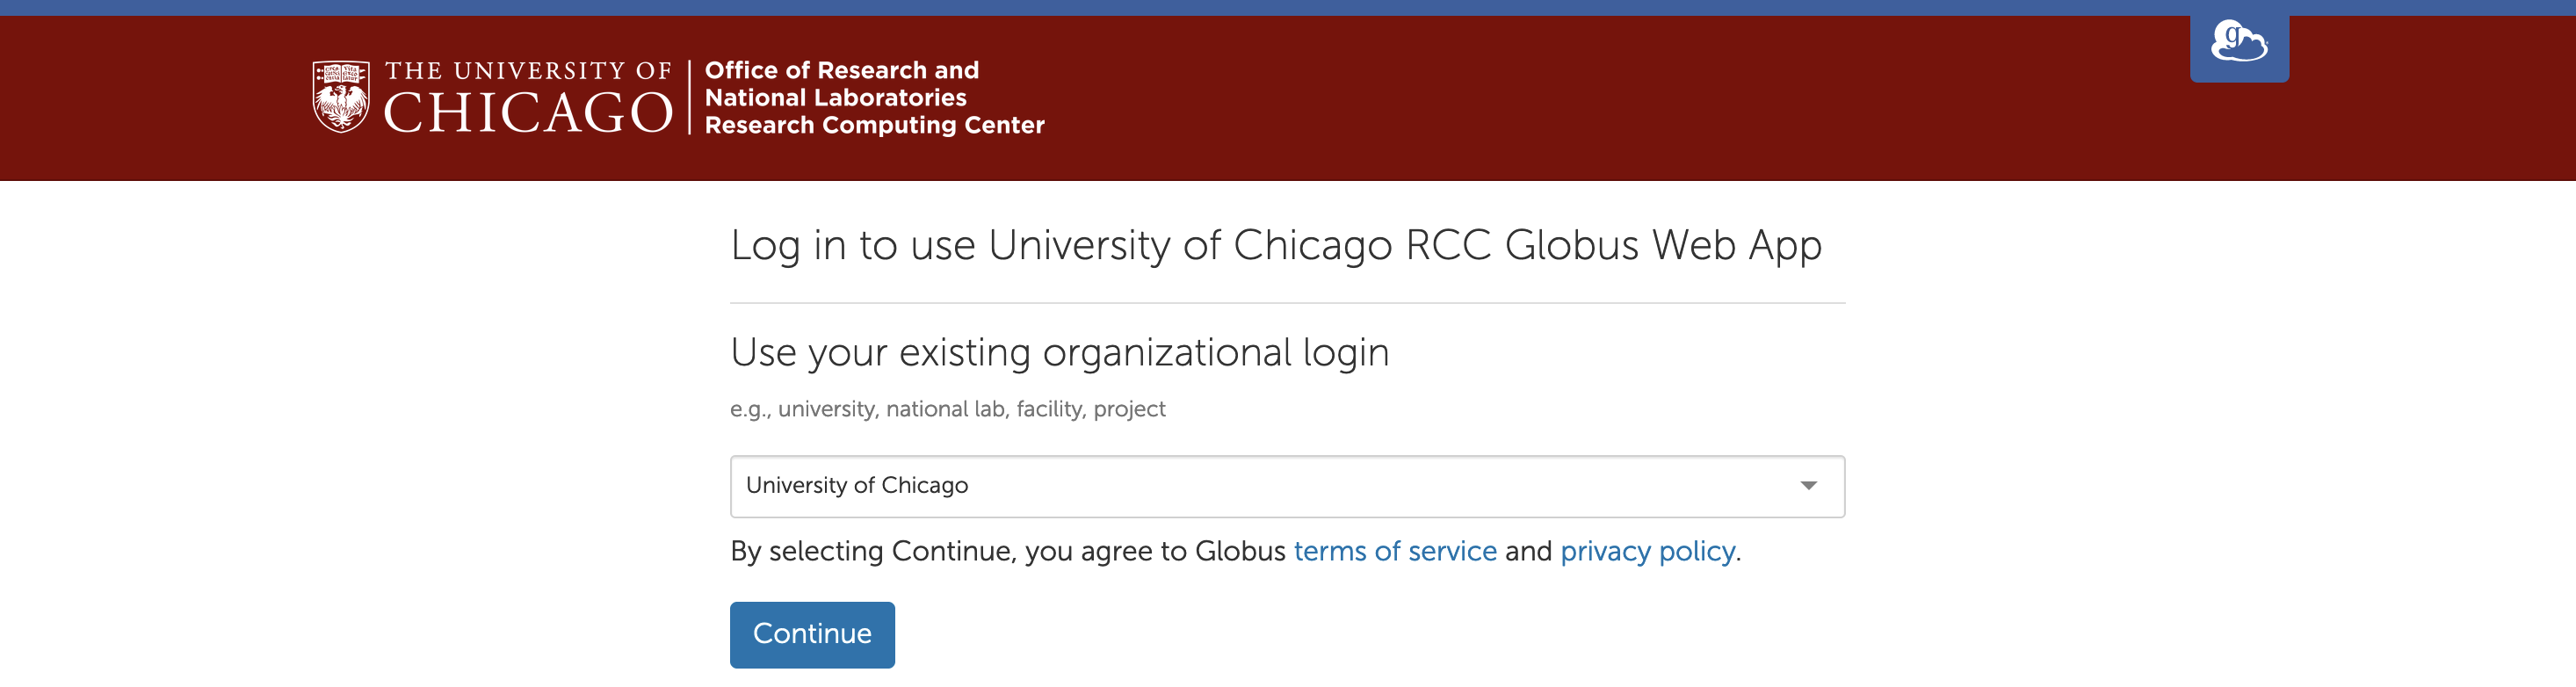 The University of Chicago Globus landing page. "University of Chicago" is selected from the drop-down menu.